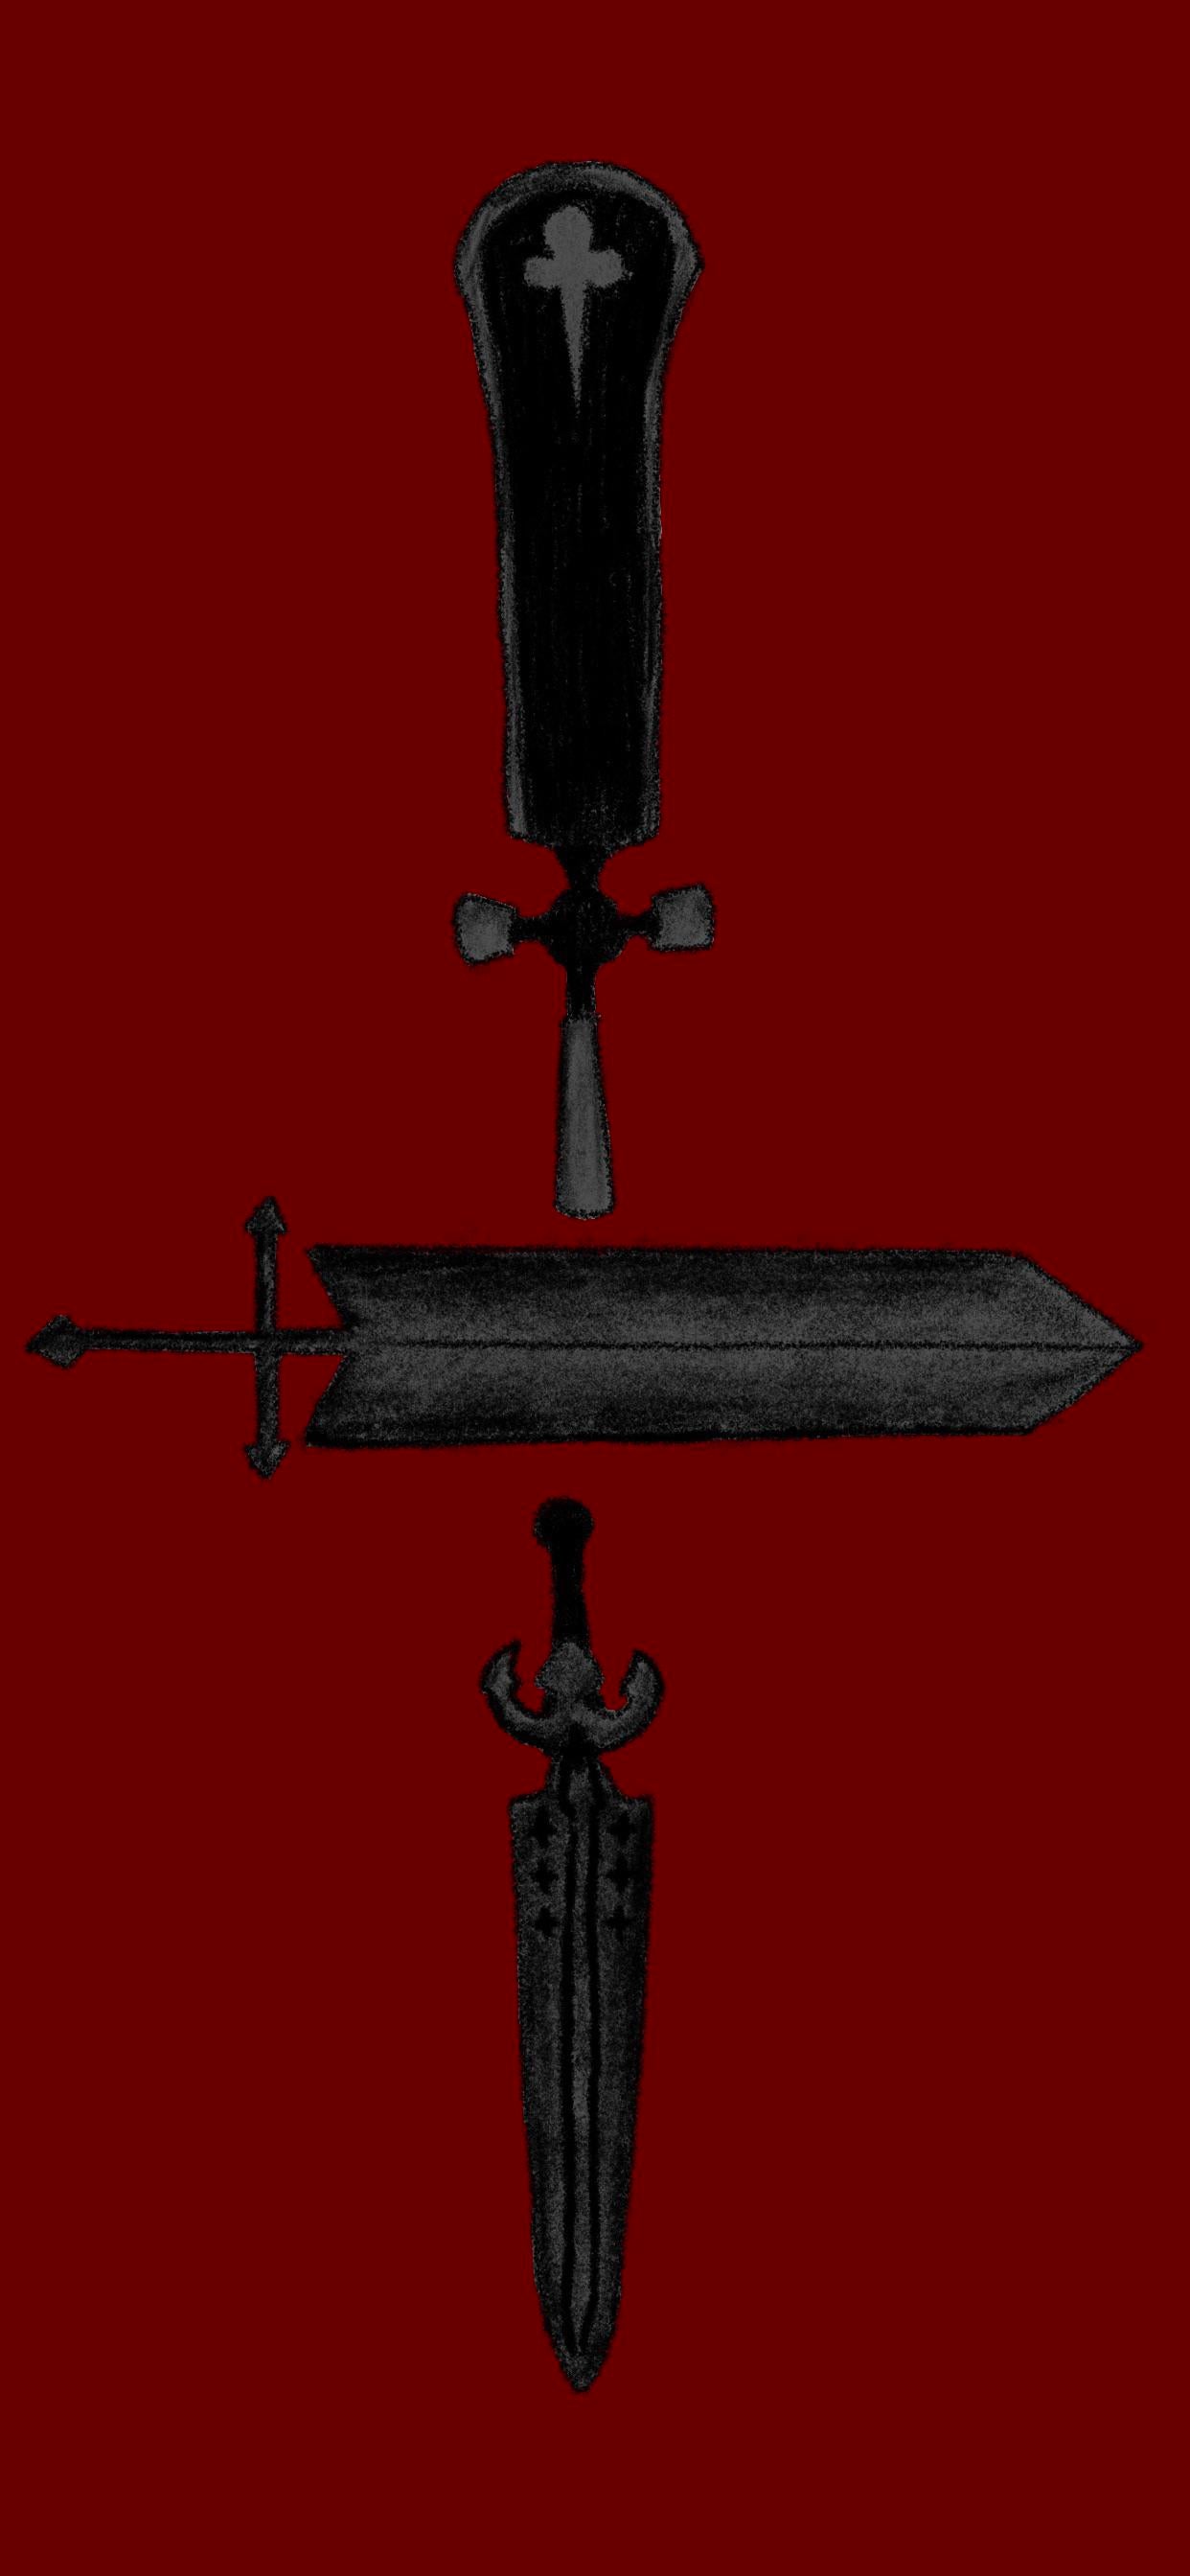 Black Clover: Sword Of The Wizard King Wallpaper